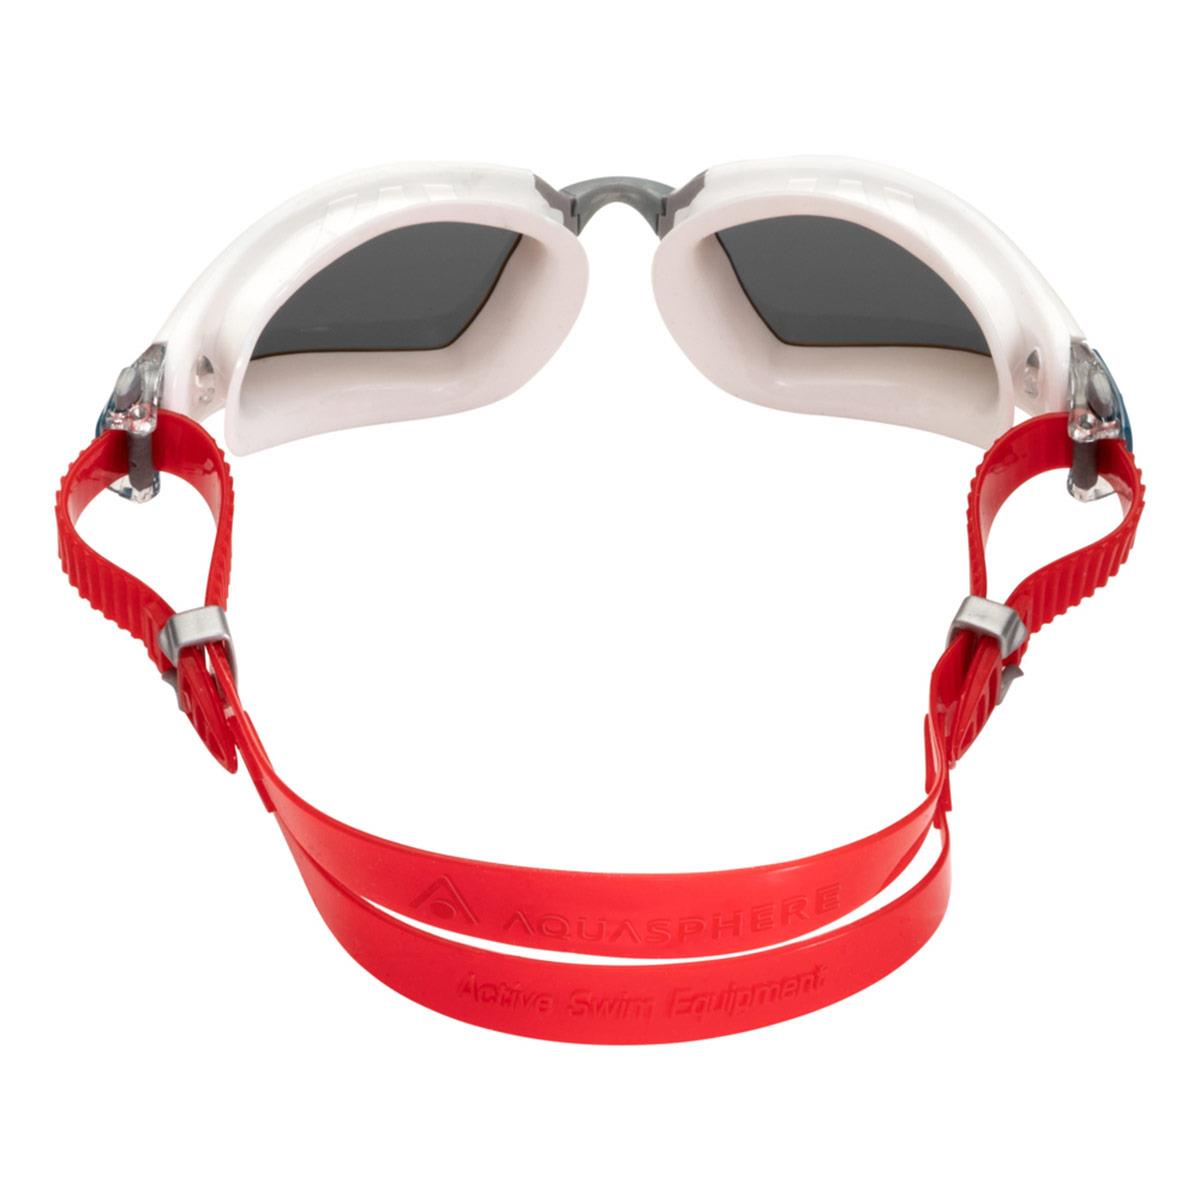 Aquasphere Kayenne Pro Photochromatic Goggles - White/ Red